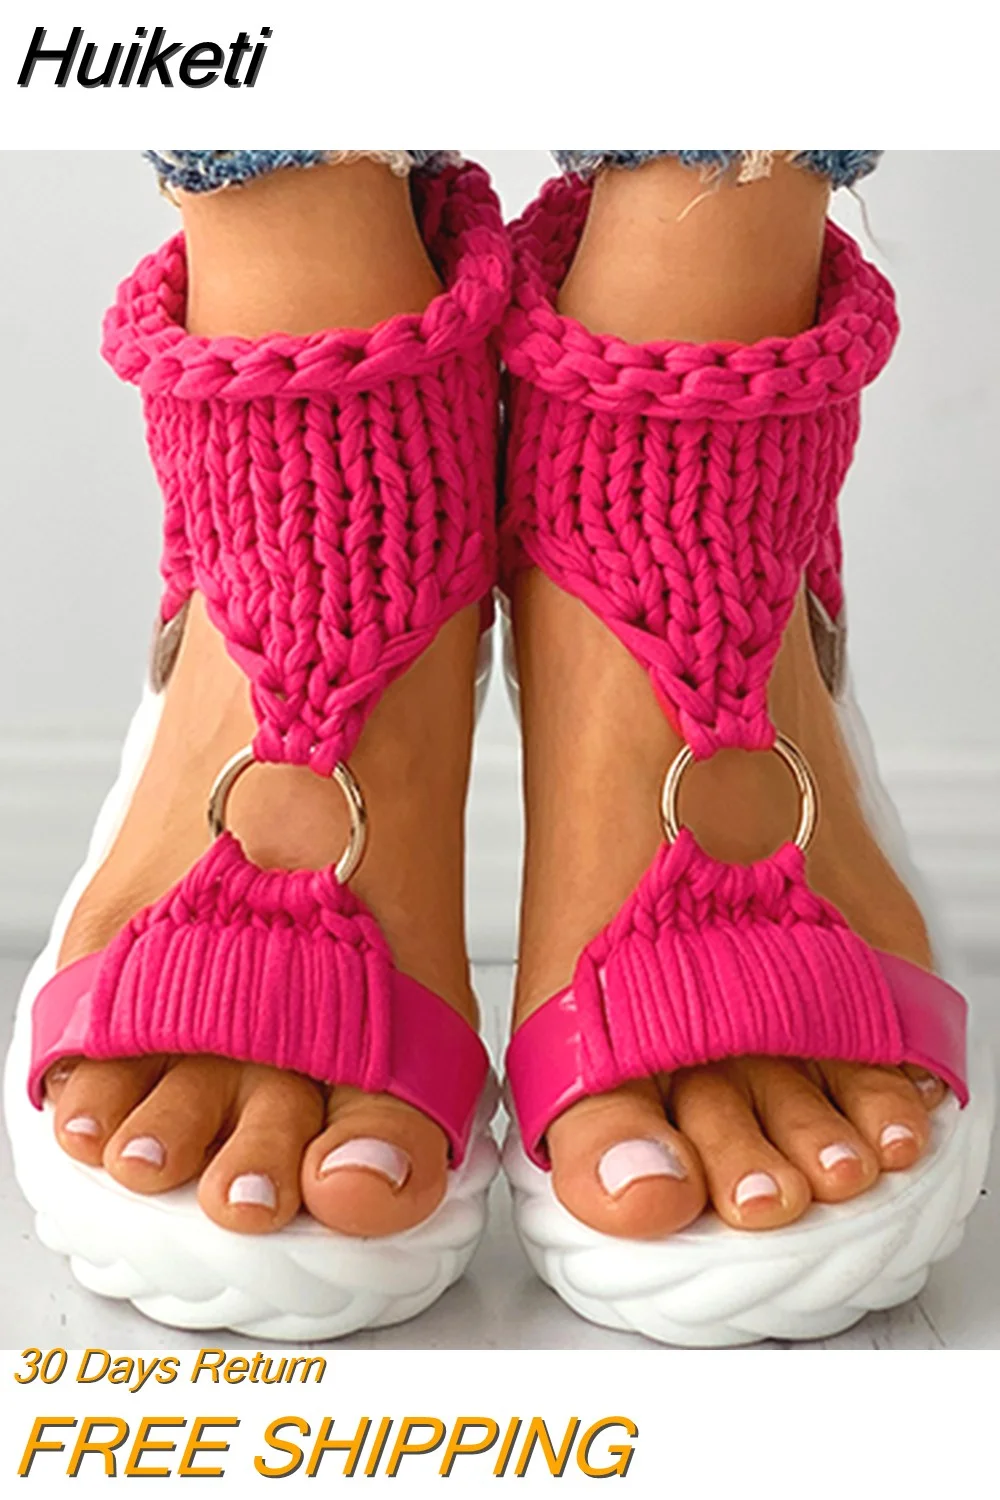 Huiketi Women Fashion Sexy Beach Wear Flat Shoes Solid Color Braided Knit O-Ring Cutout Platform Sandals